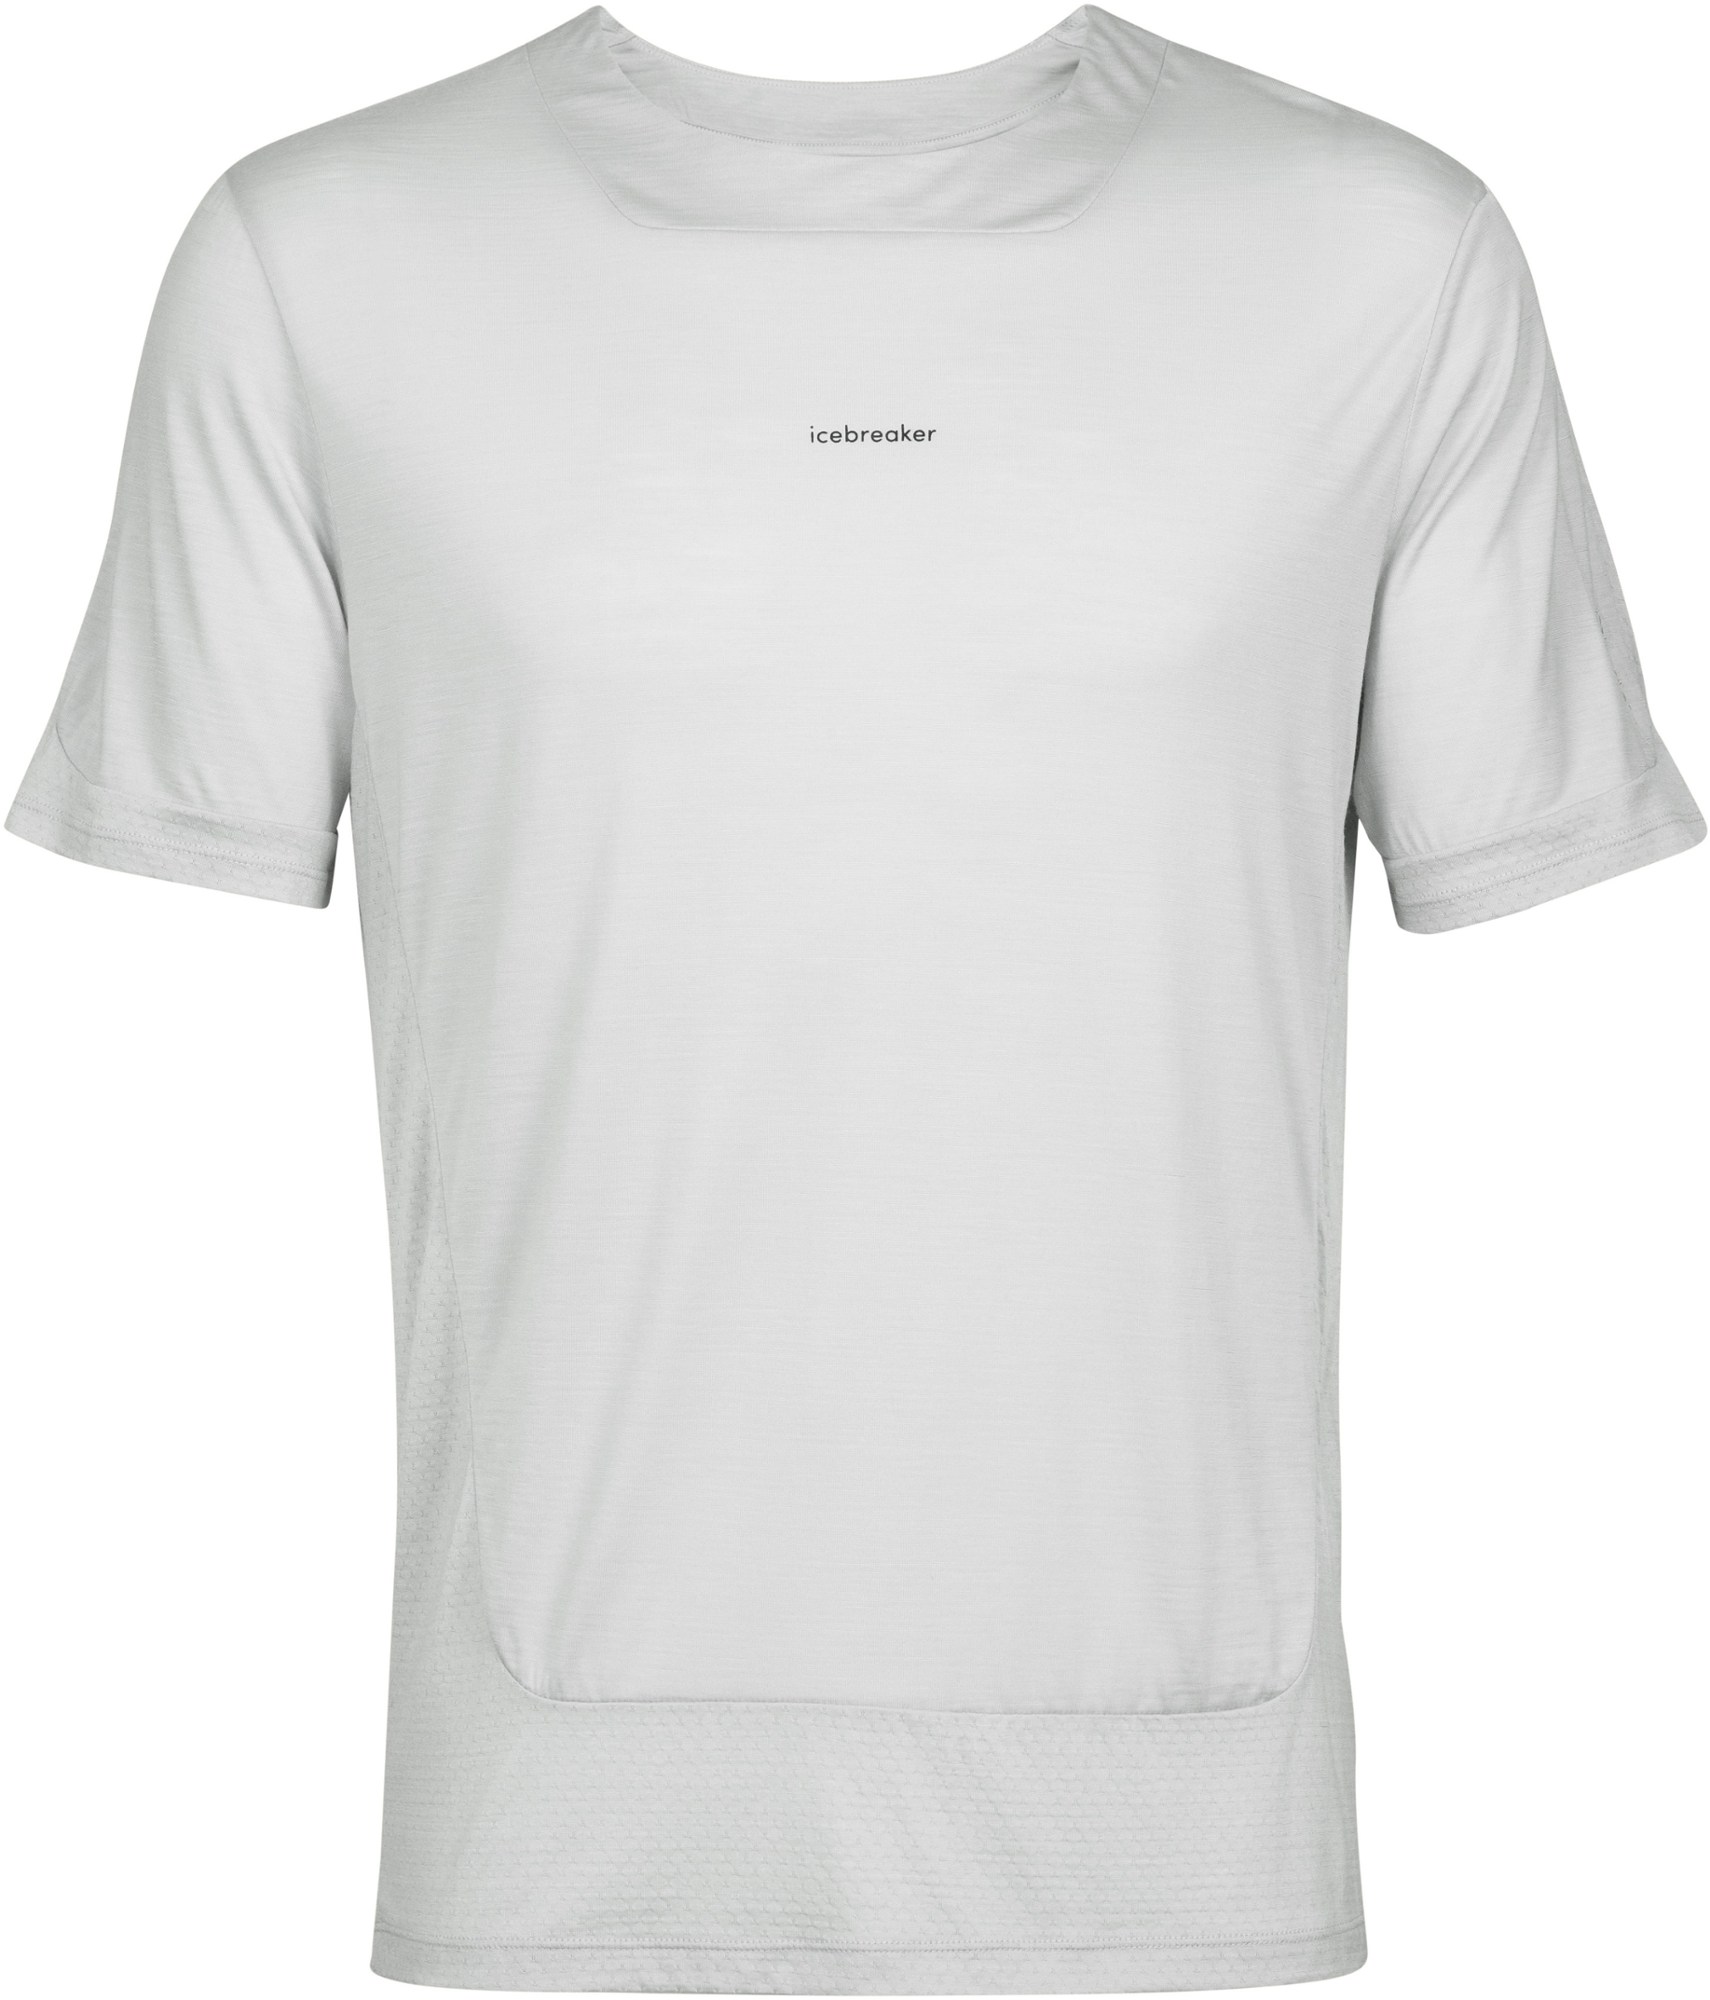 Футболка ZoneKnit Merino – мужская Icebreaker, серый футболка без рукавов icebreaker zoneknit geodetic оранжевый